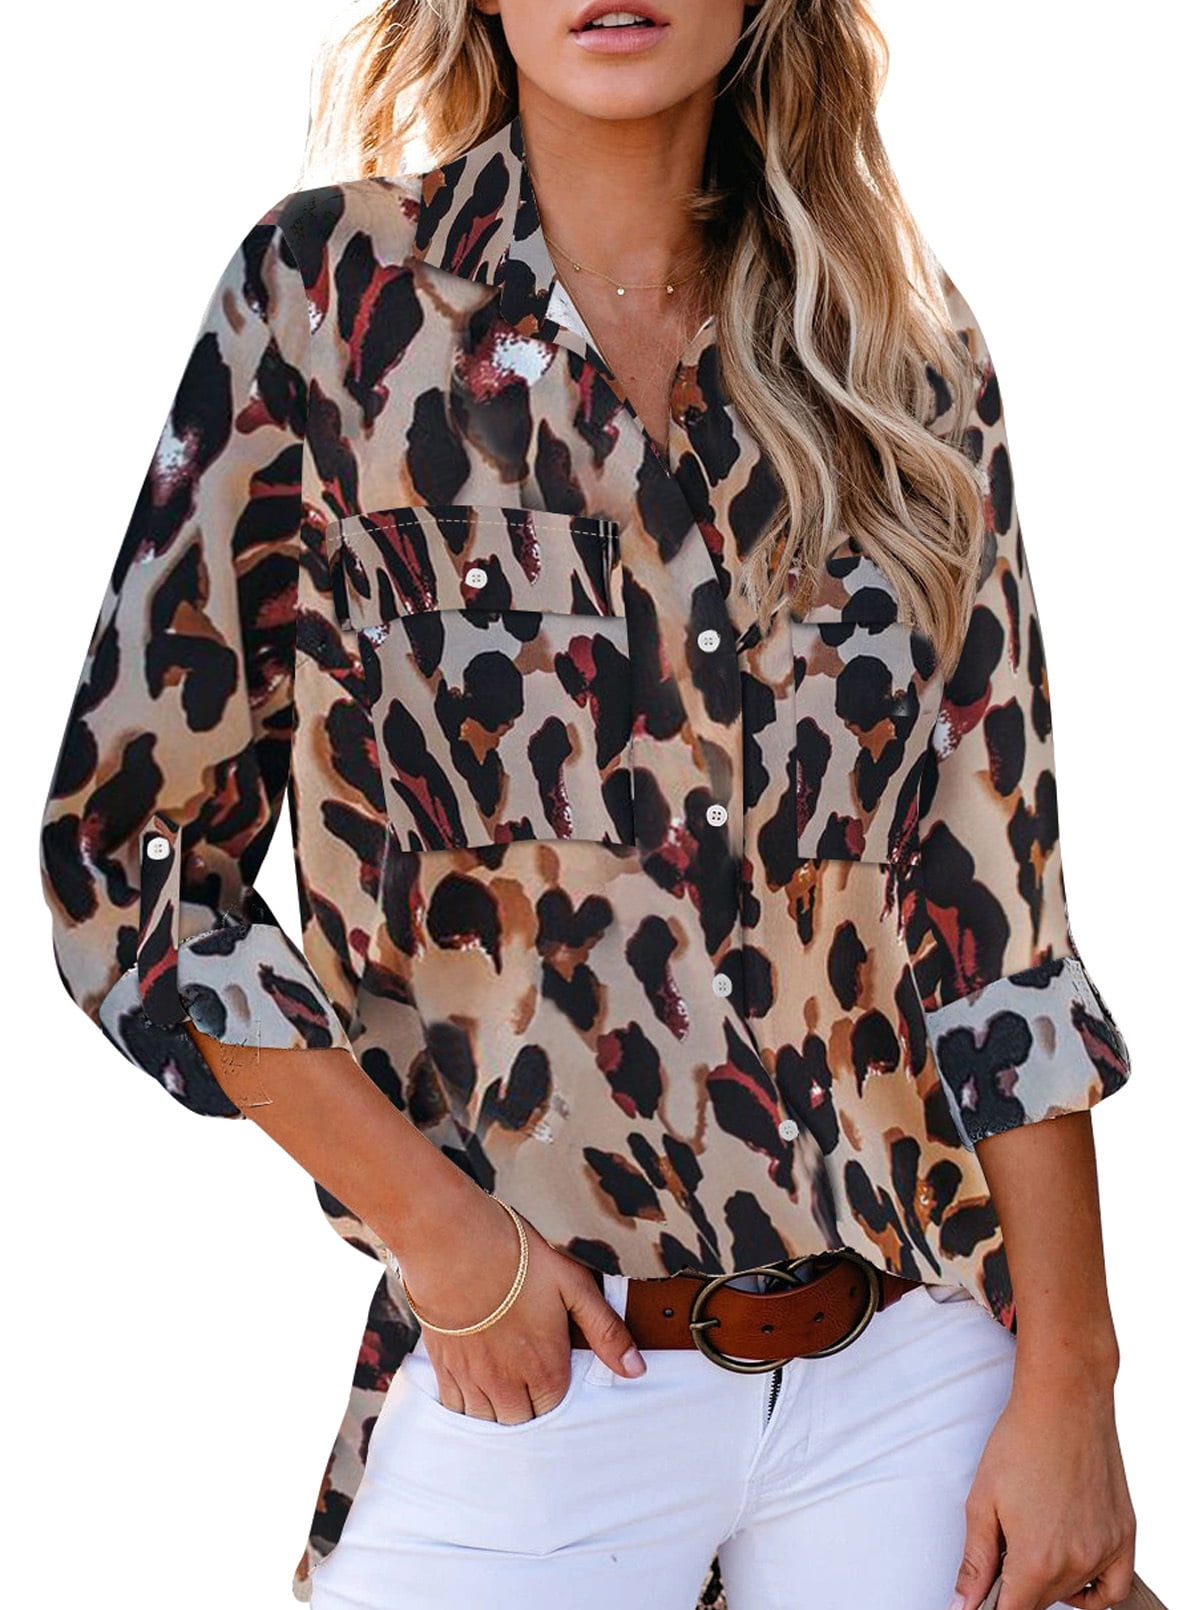 Snakeskin Print Tops for Women EDC Casual Snake Printing Long Sleeve T Shirt Blouse Tank Sweatshirt 